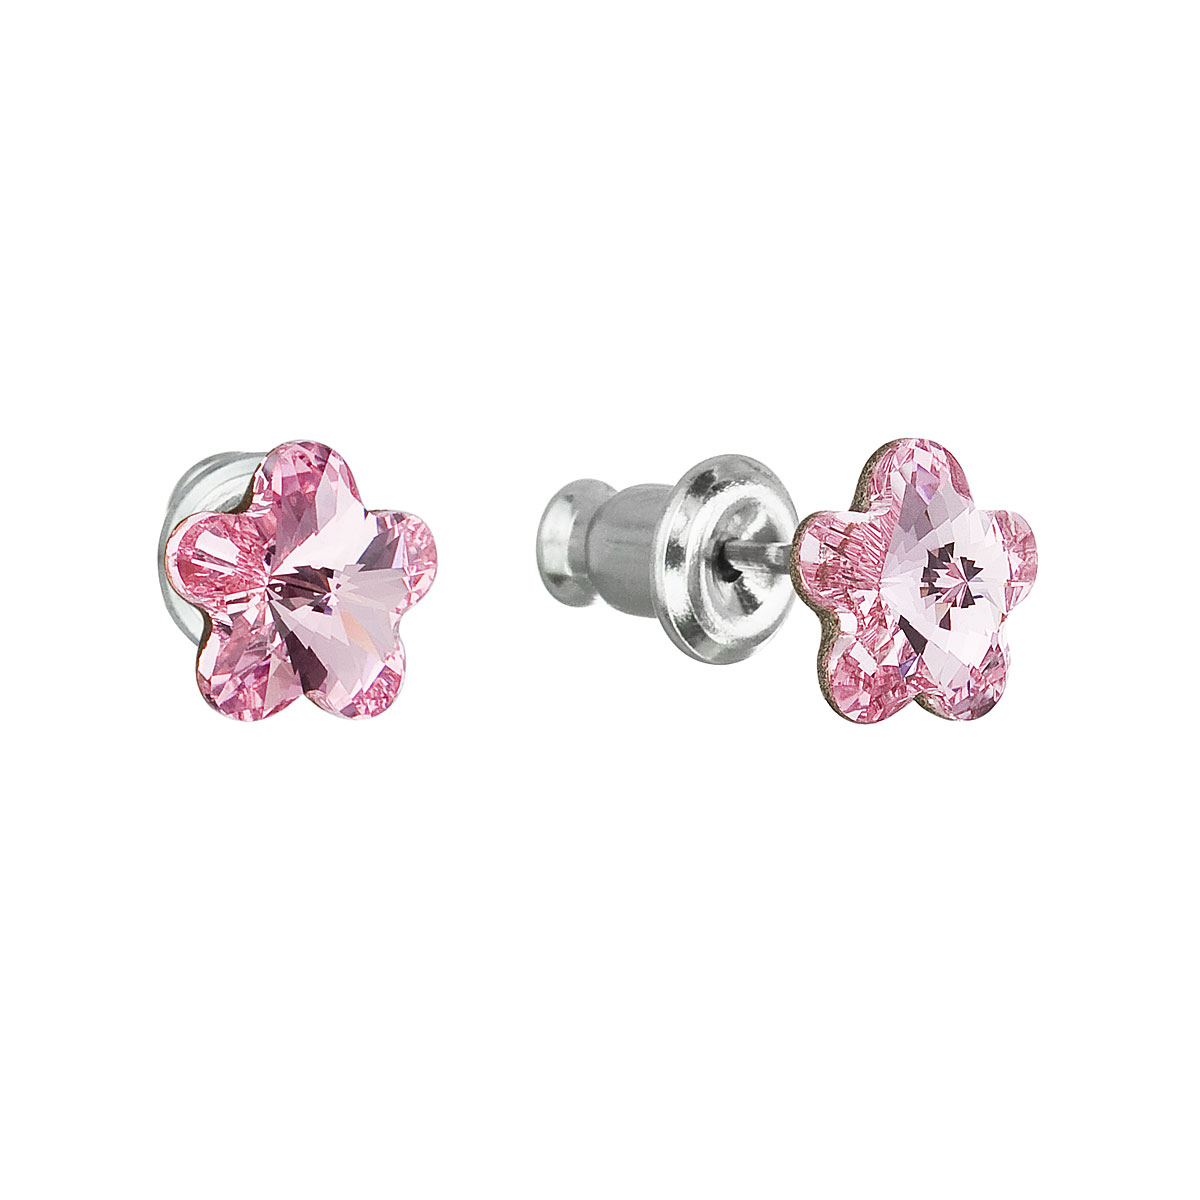 Evolution Group Náušnice bižuterie se Swarovski krystaly růžová kytička 51051.3 rose